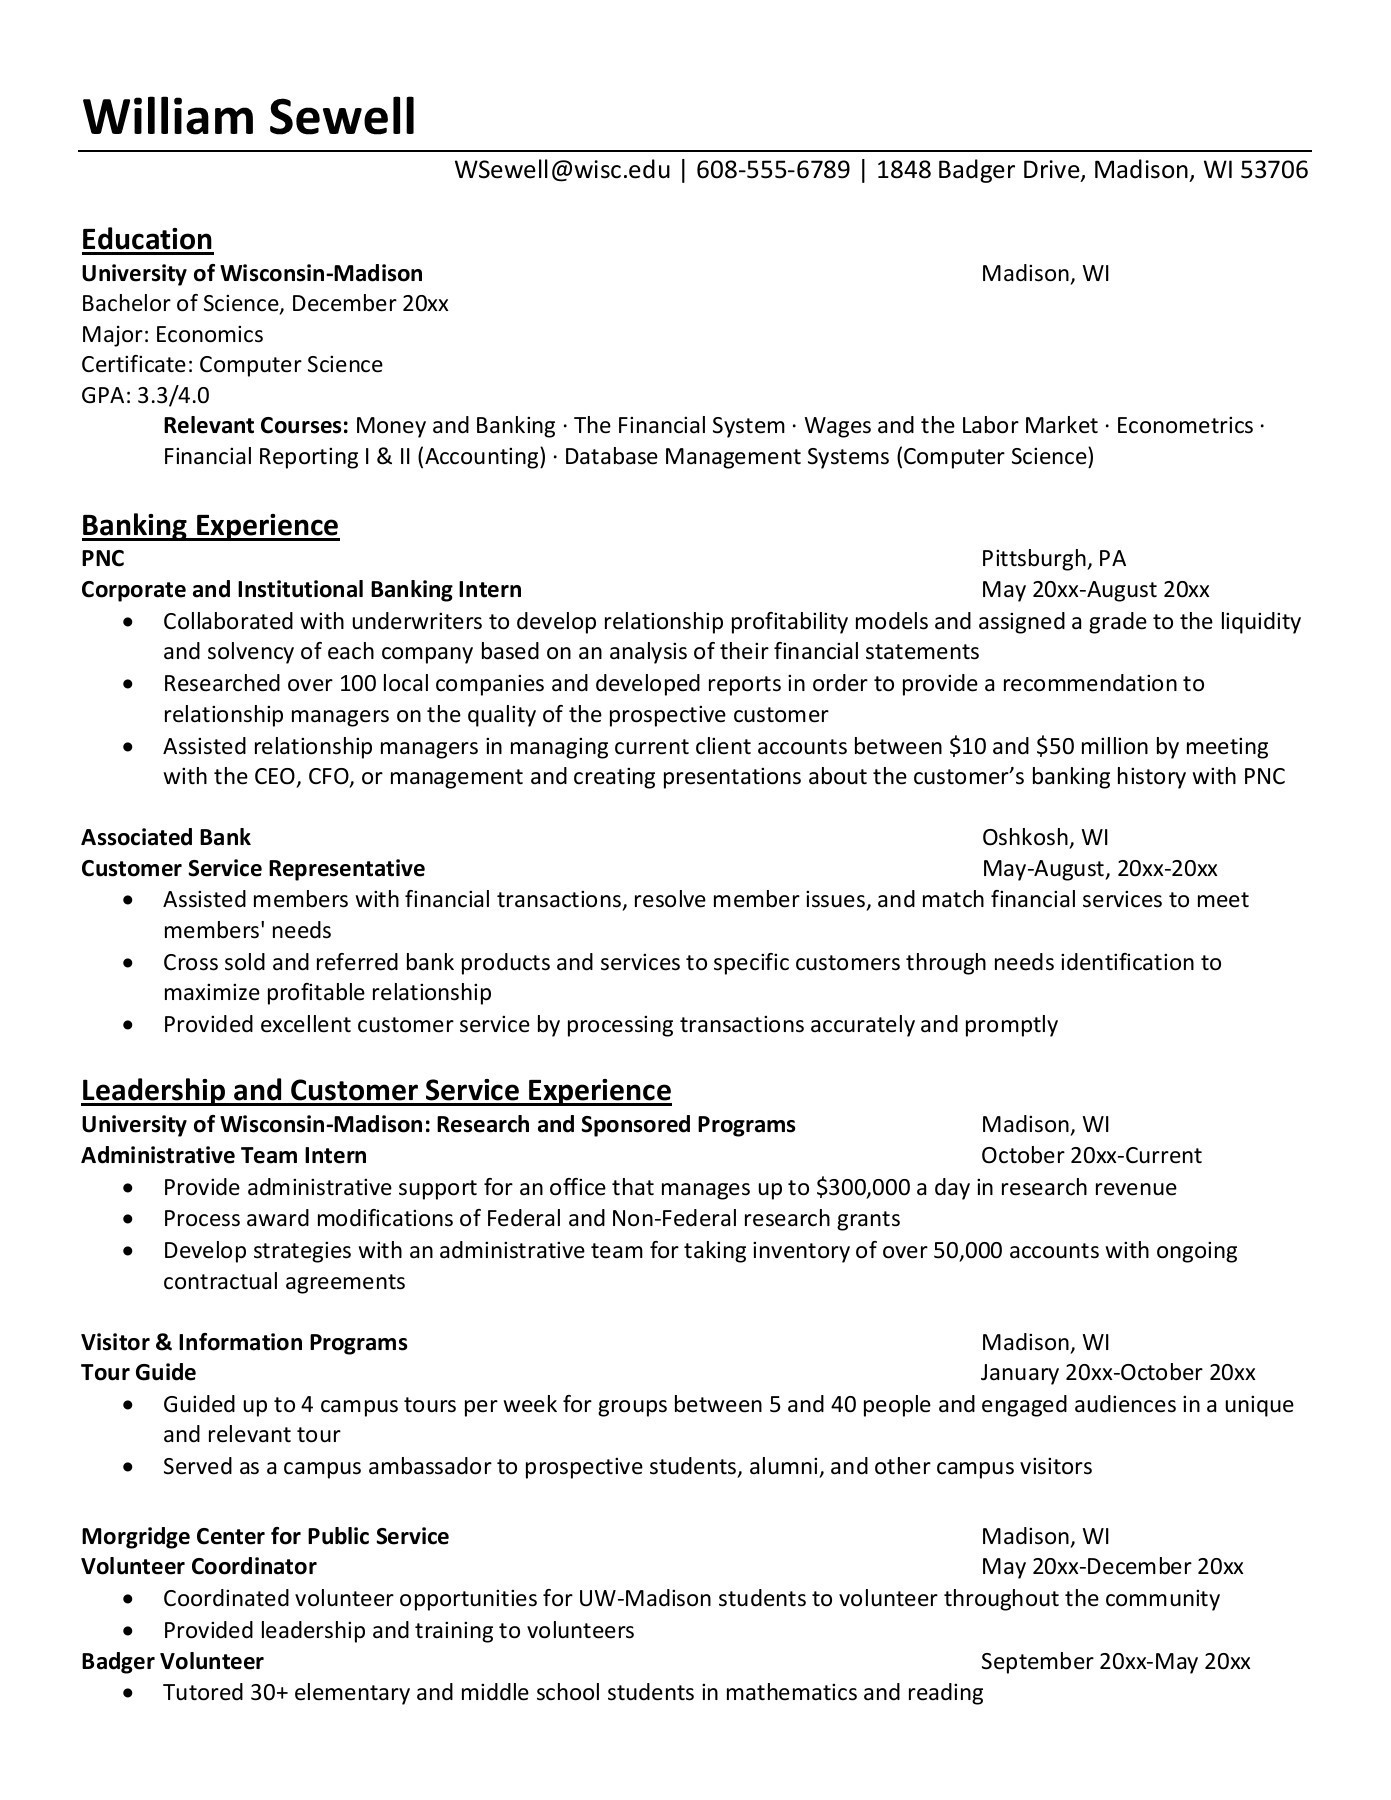 Uw Madison Business School Resume Template Economics Resume Examples – Department Of Economics Pages 1 – 7 …